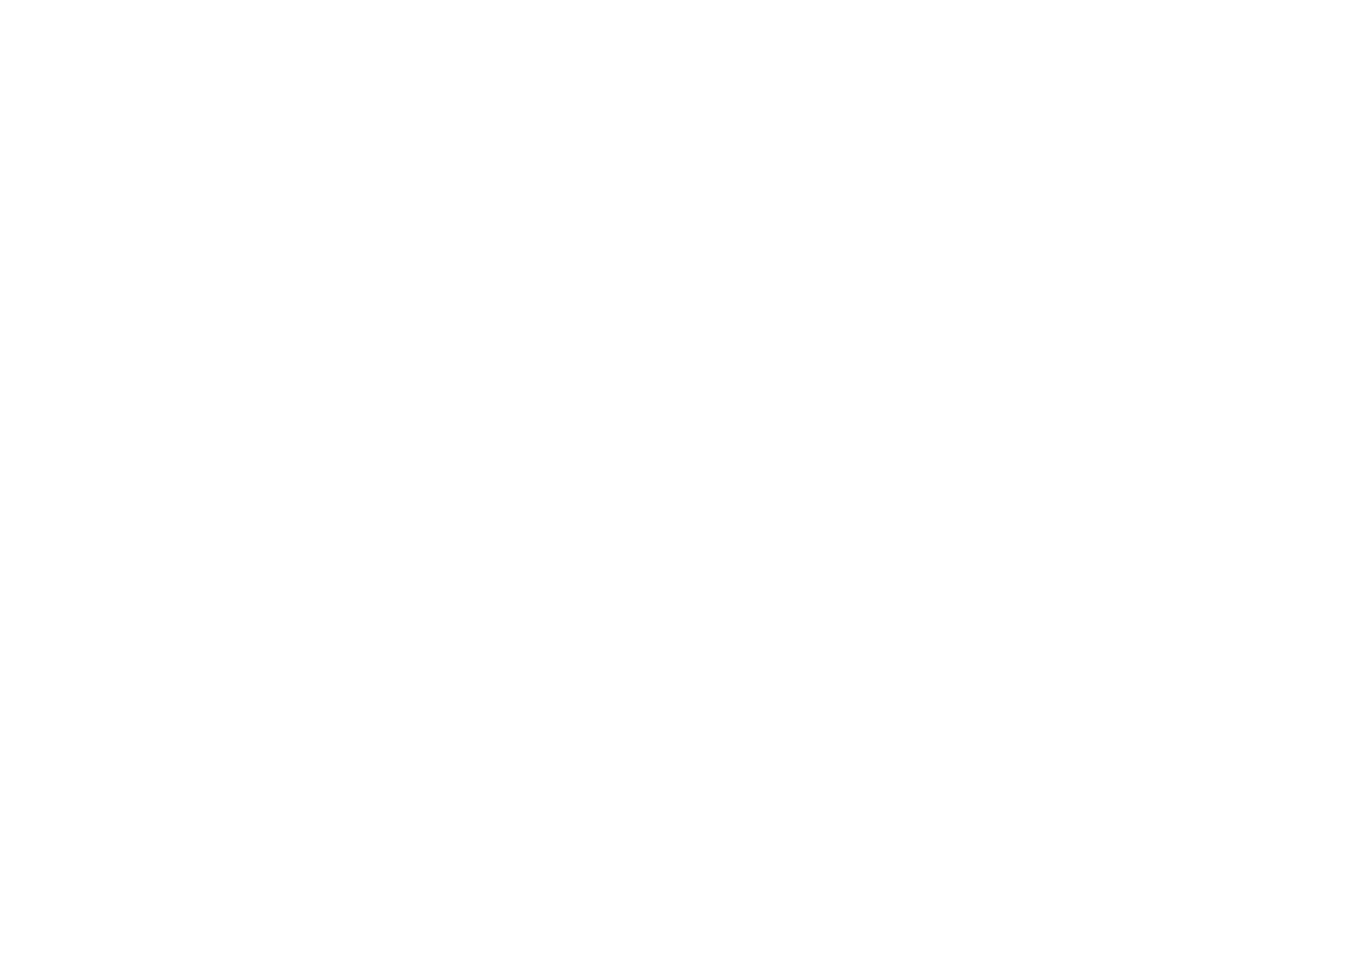 Blake Britton Photography